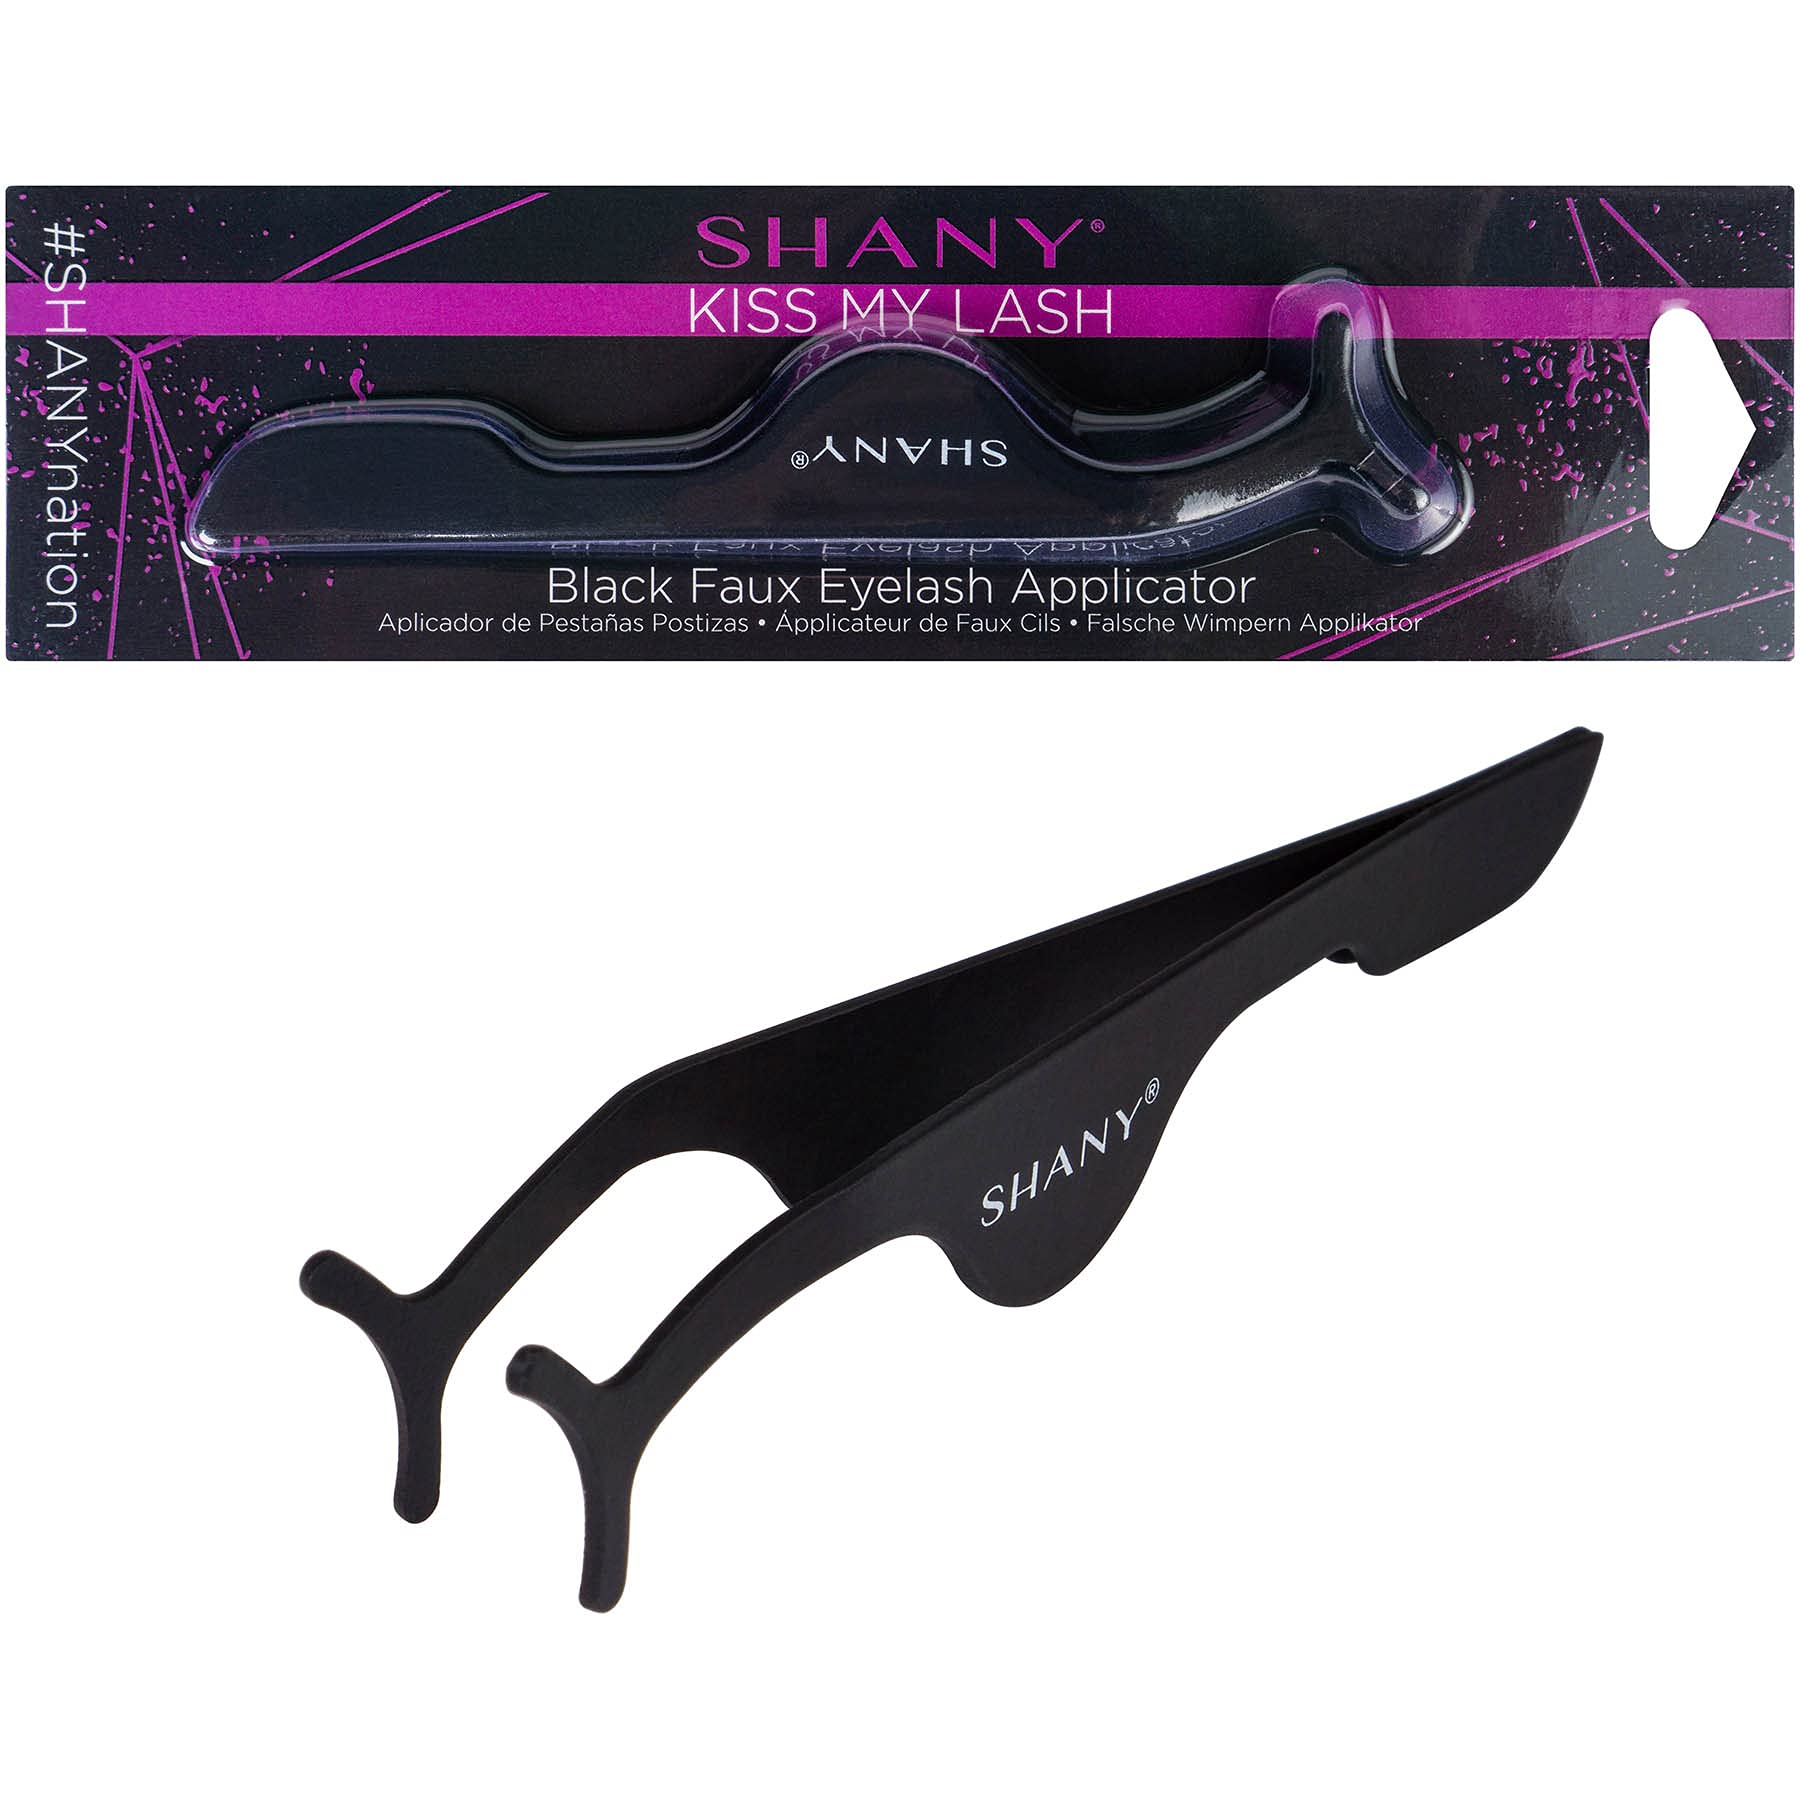 SHANY Kiss My Lash Faux Eyelash Applicator - Eyelash Extension Durable Stainless Steel Tweezers - Applicator/Remover - BLACK